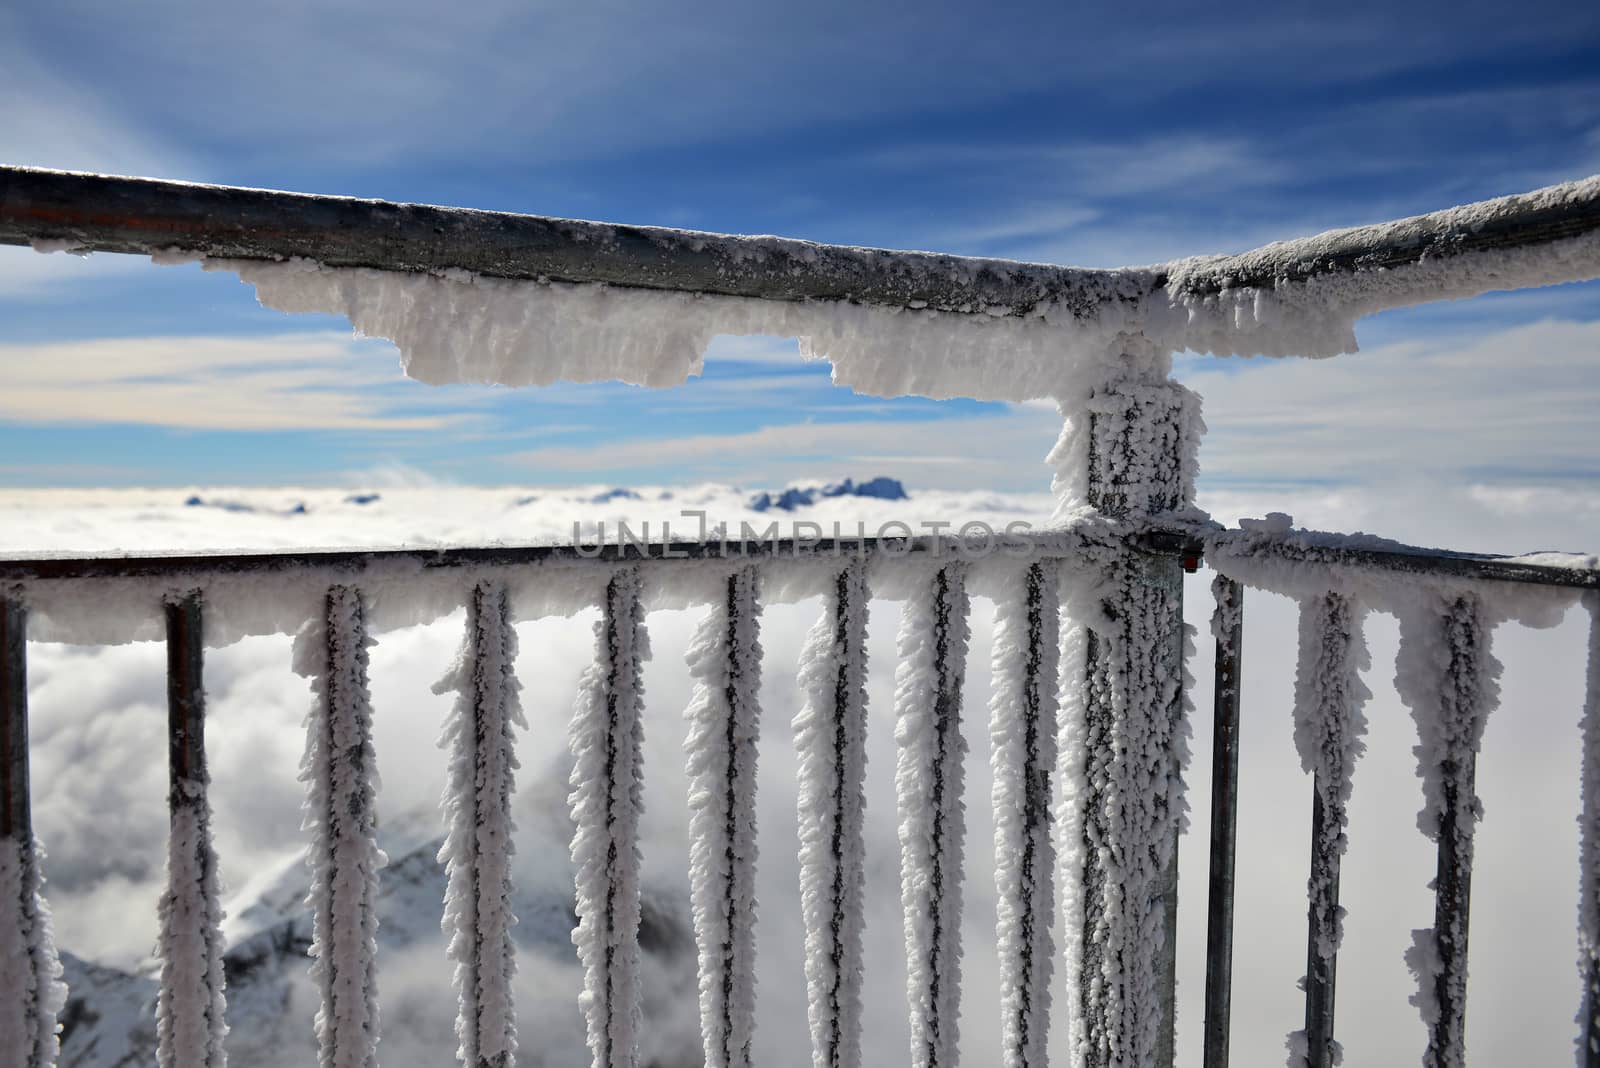 Alps from a frosty balcony by jetstream4wd